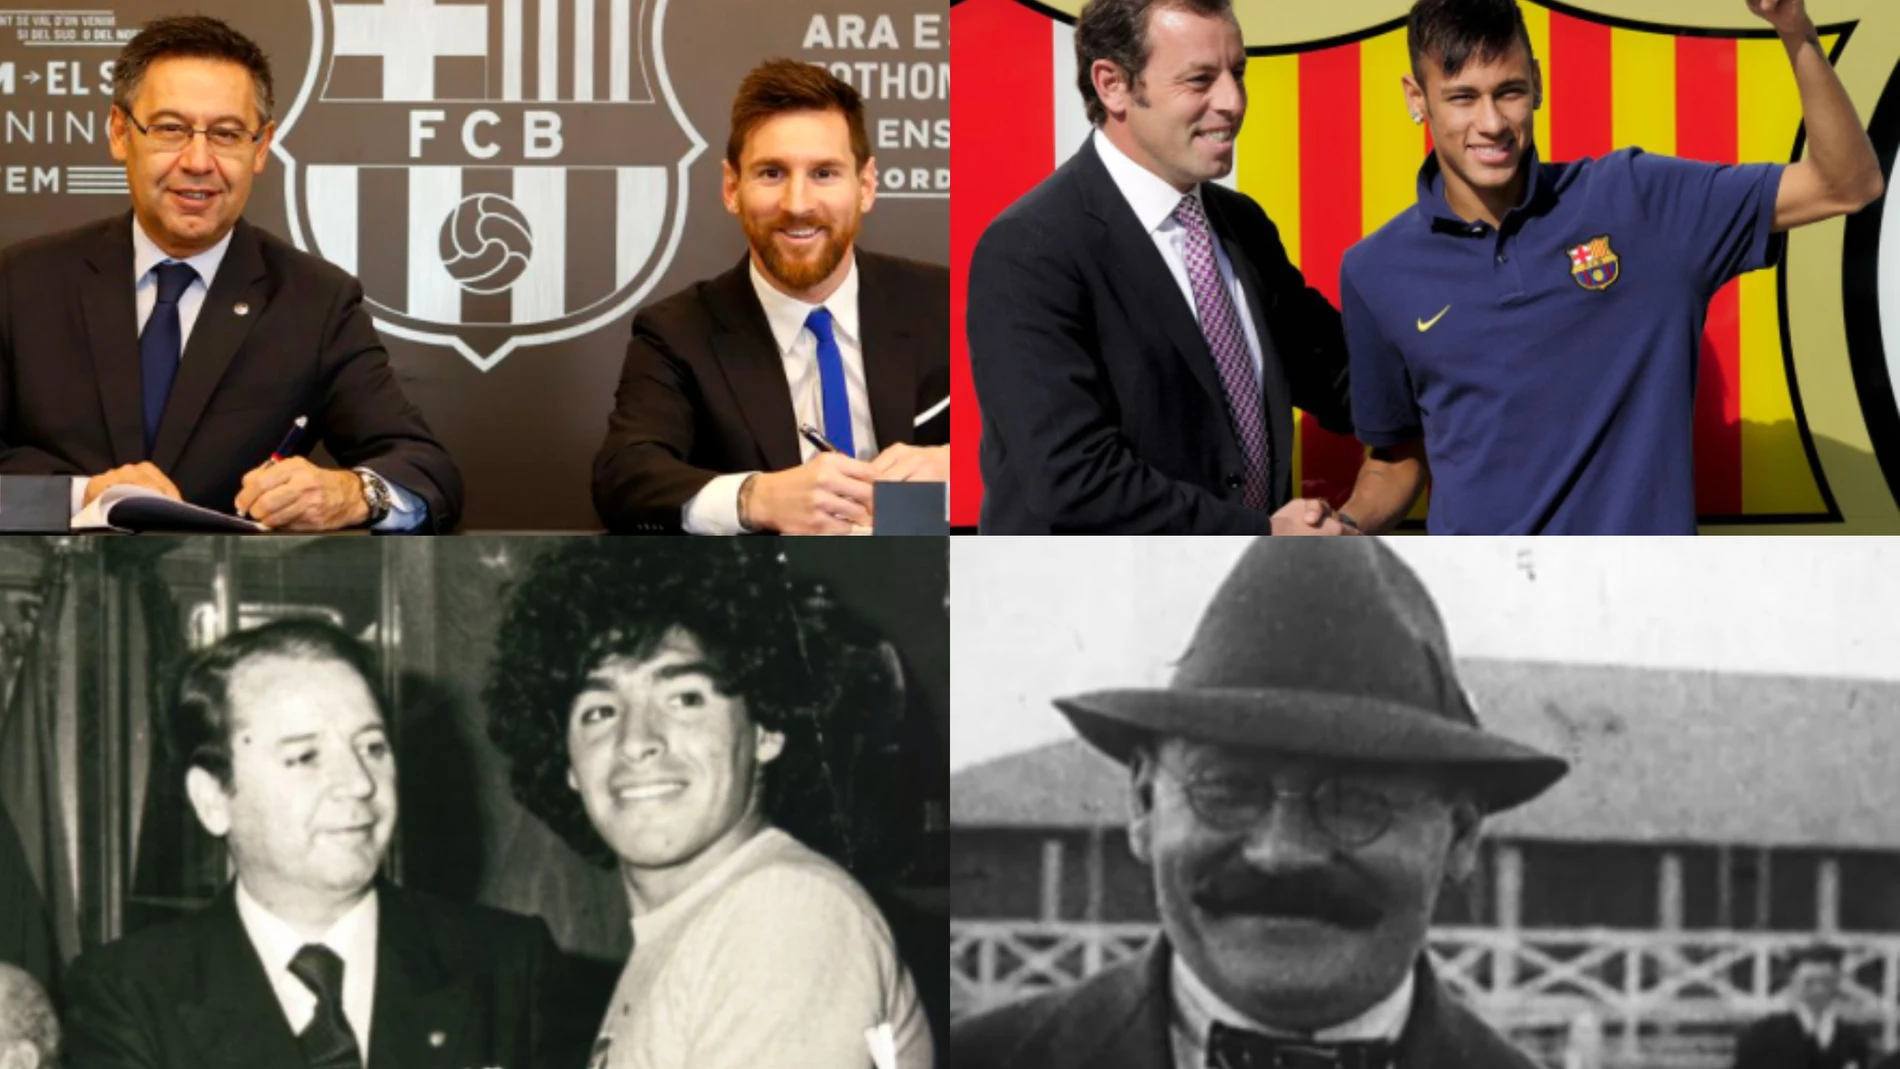 Presidentes del fútbol Club Barcelona encarcelados o represaliados